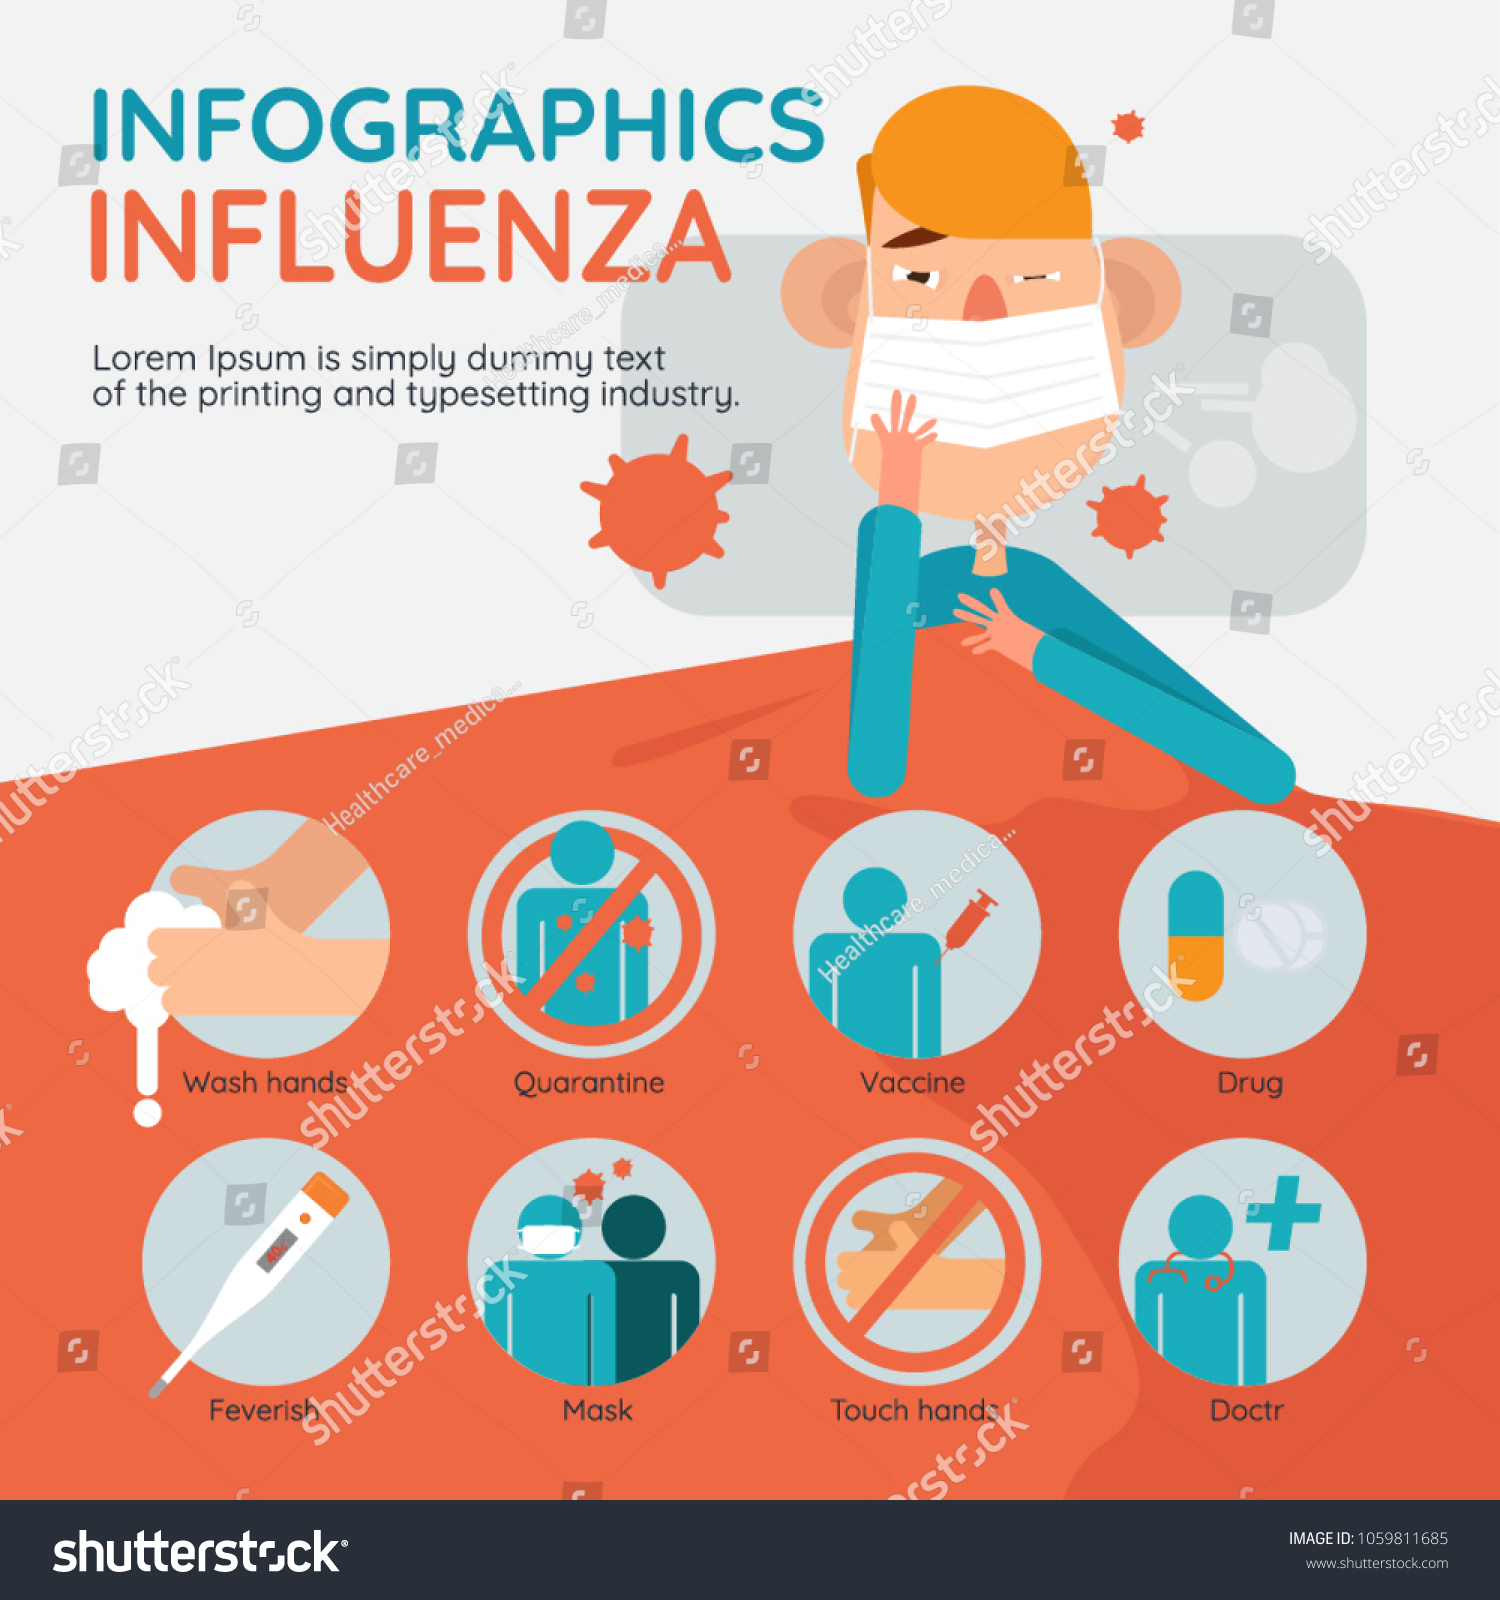 Infographics Influenza Vector Illustration Stock Vector Royalty Free 1059811685 Shutterstock 8372